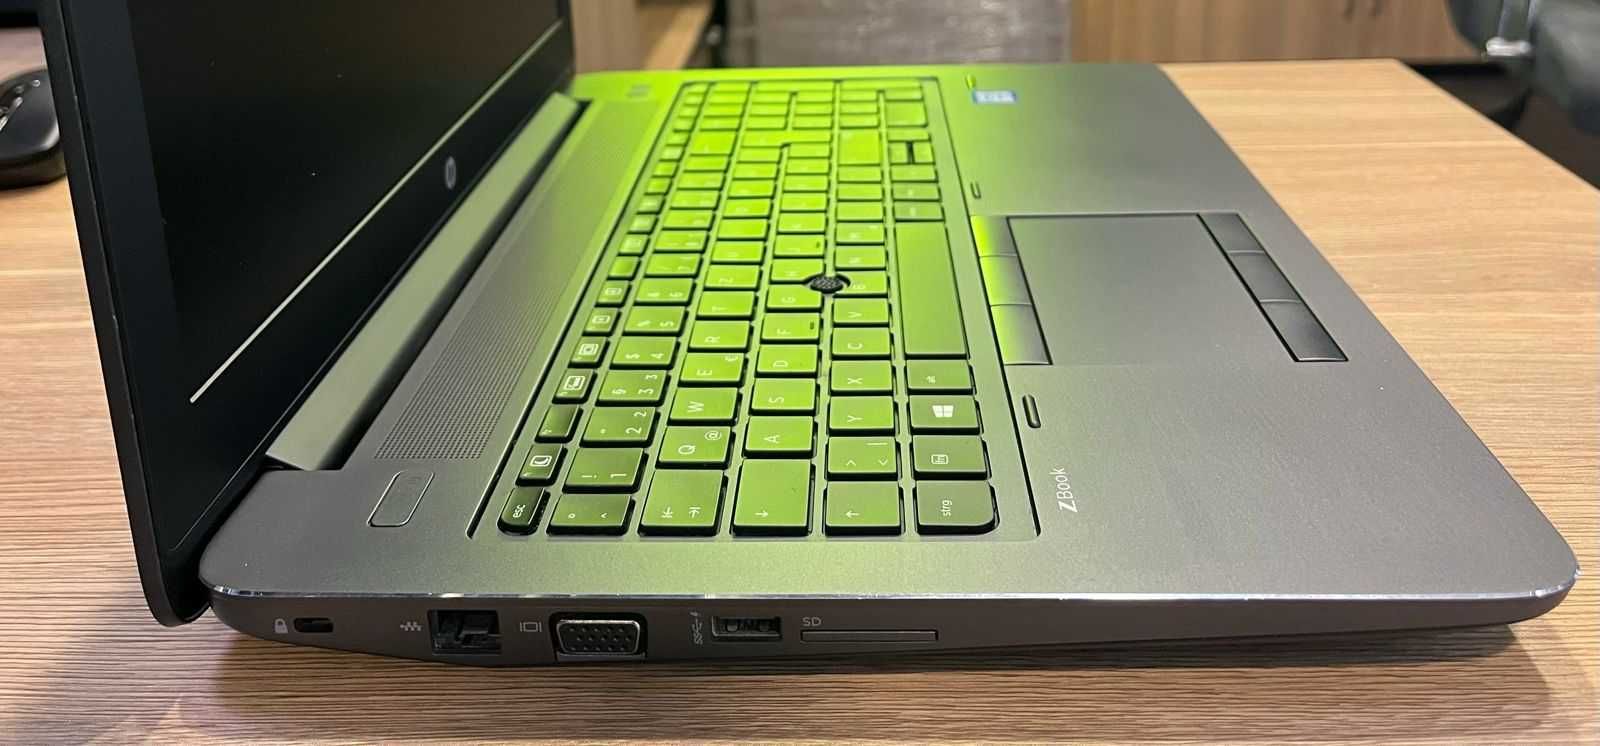 Ноутбук HP ZBook G3  (IXEON E3-1505M v5 - 2800Ghz 4/8) г. Алматы.